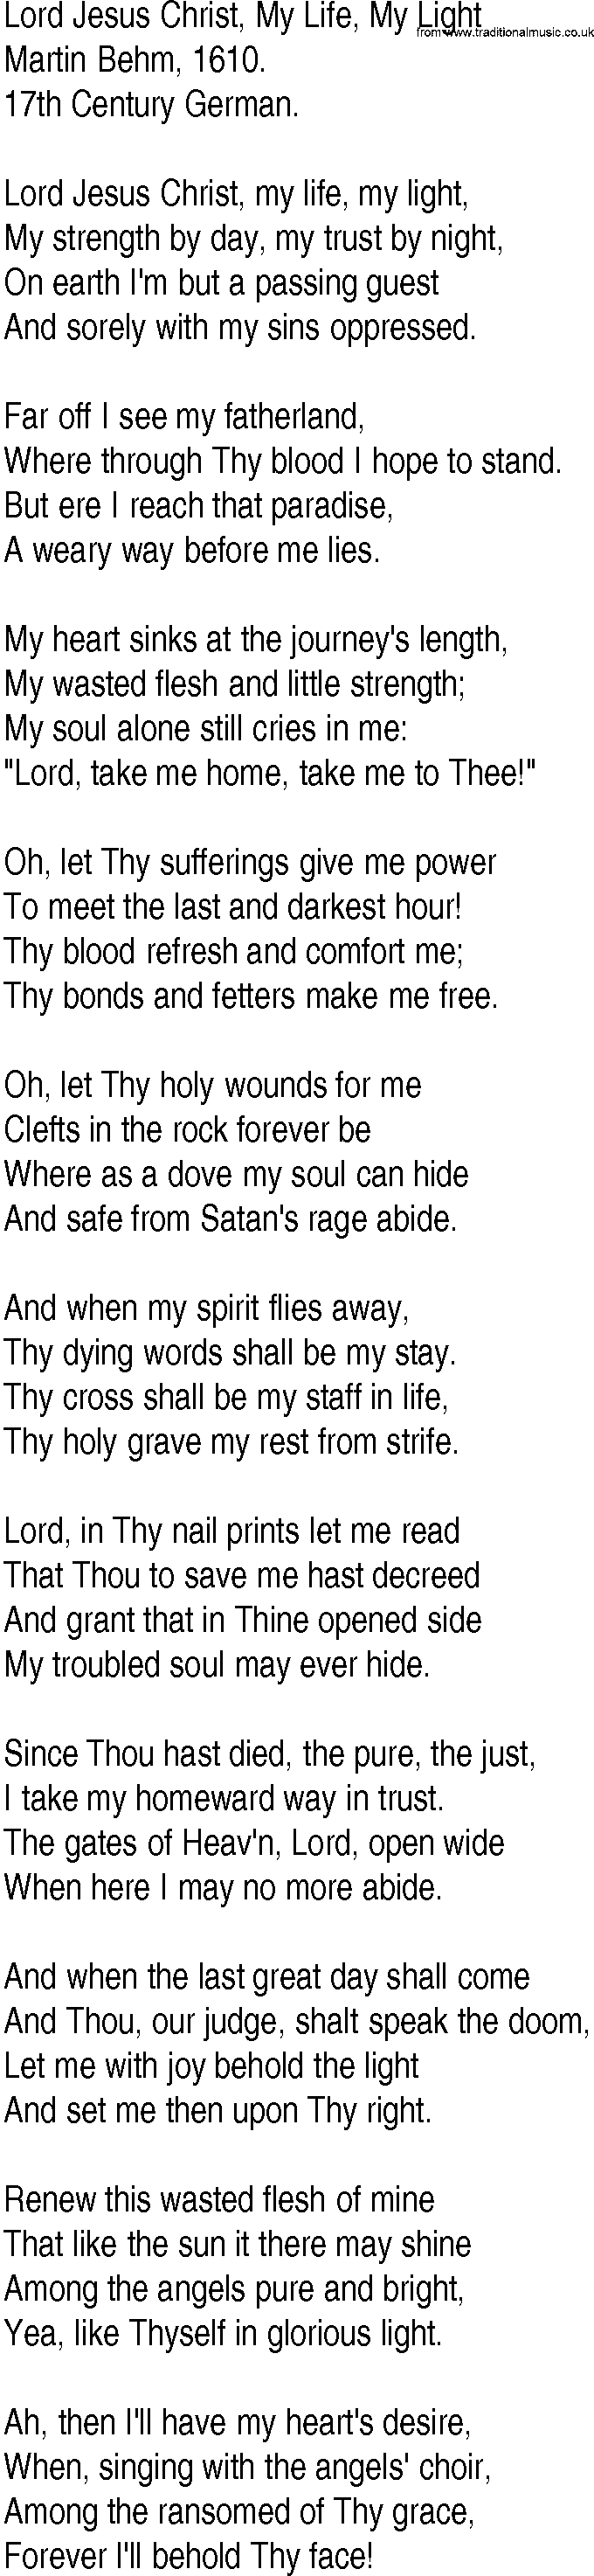 Hymn and Gospel Song: Lord Jesus Christ, My Life, My Light by Martin Behm lyrics